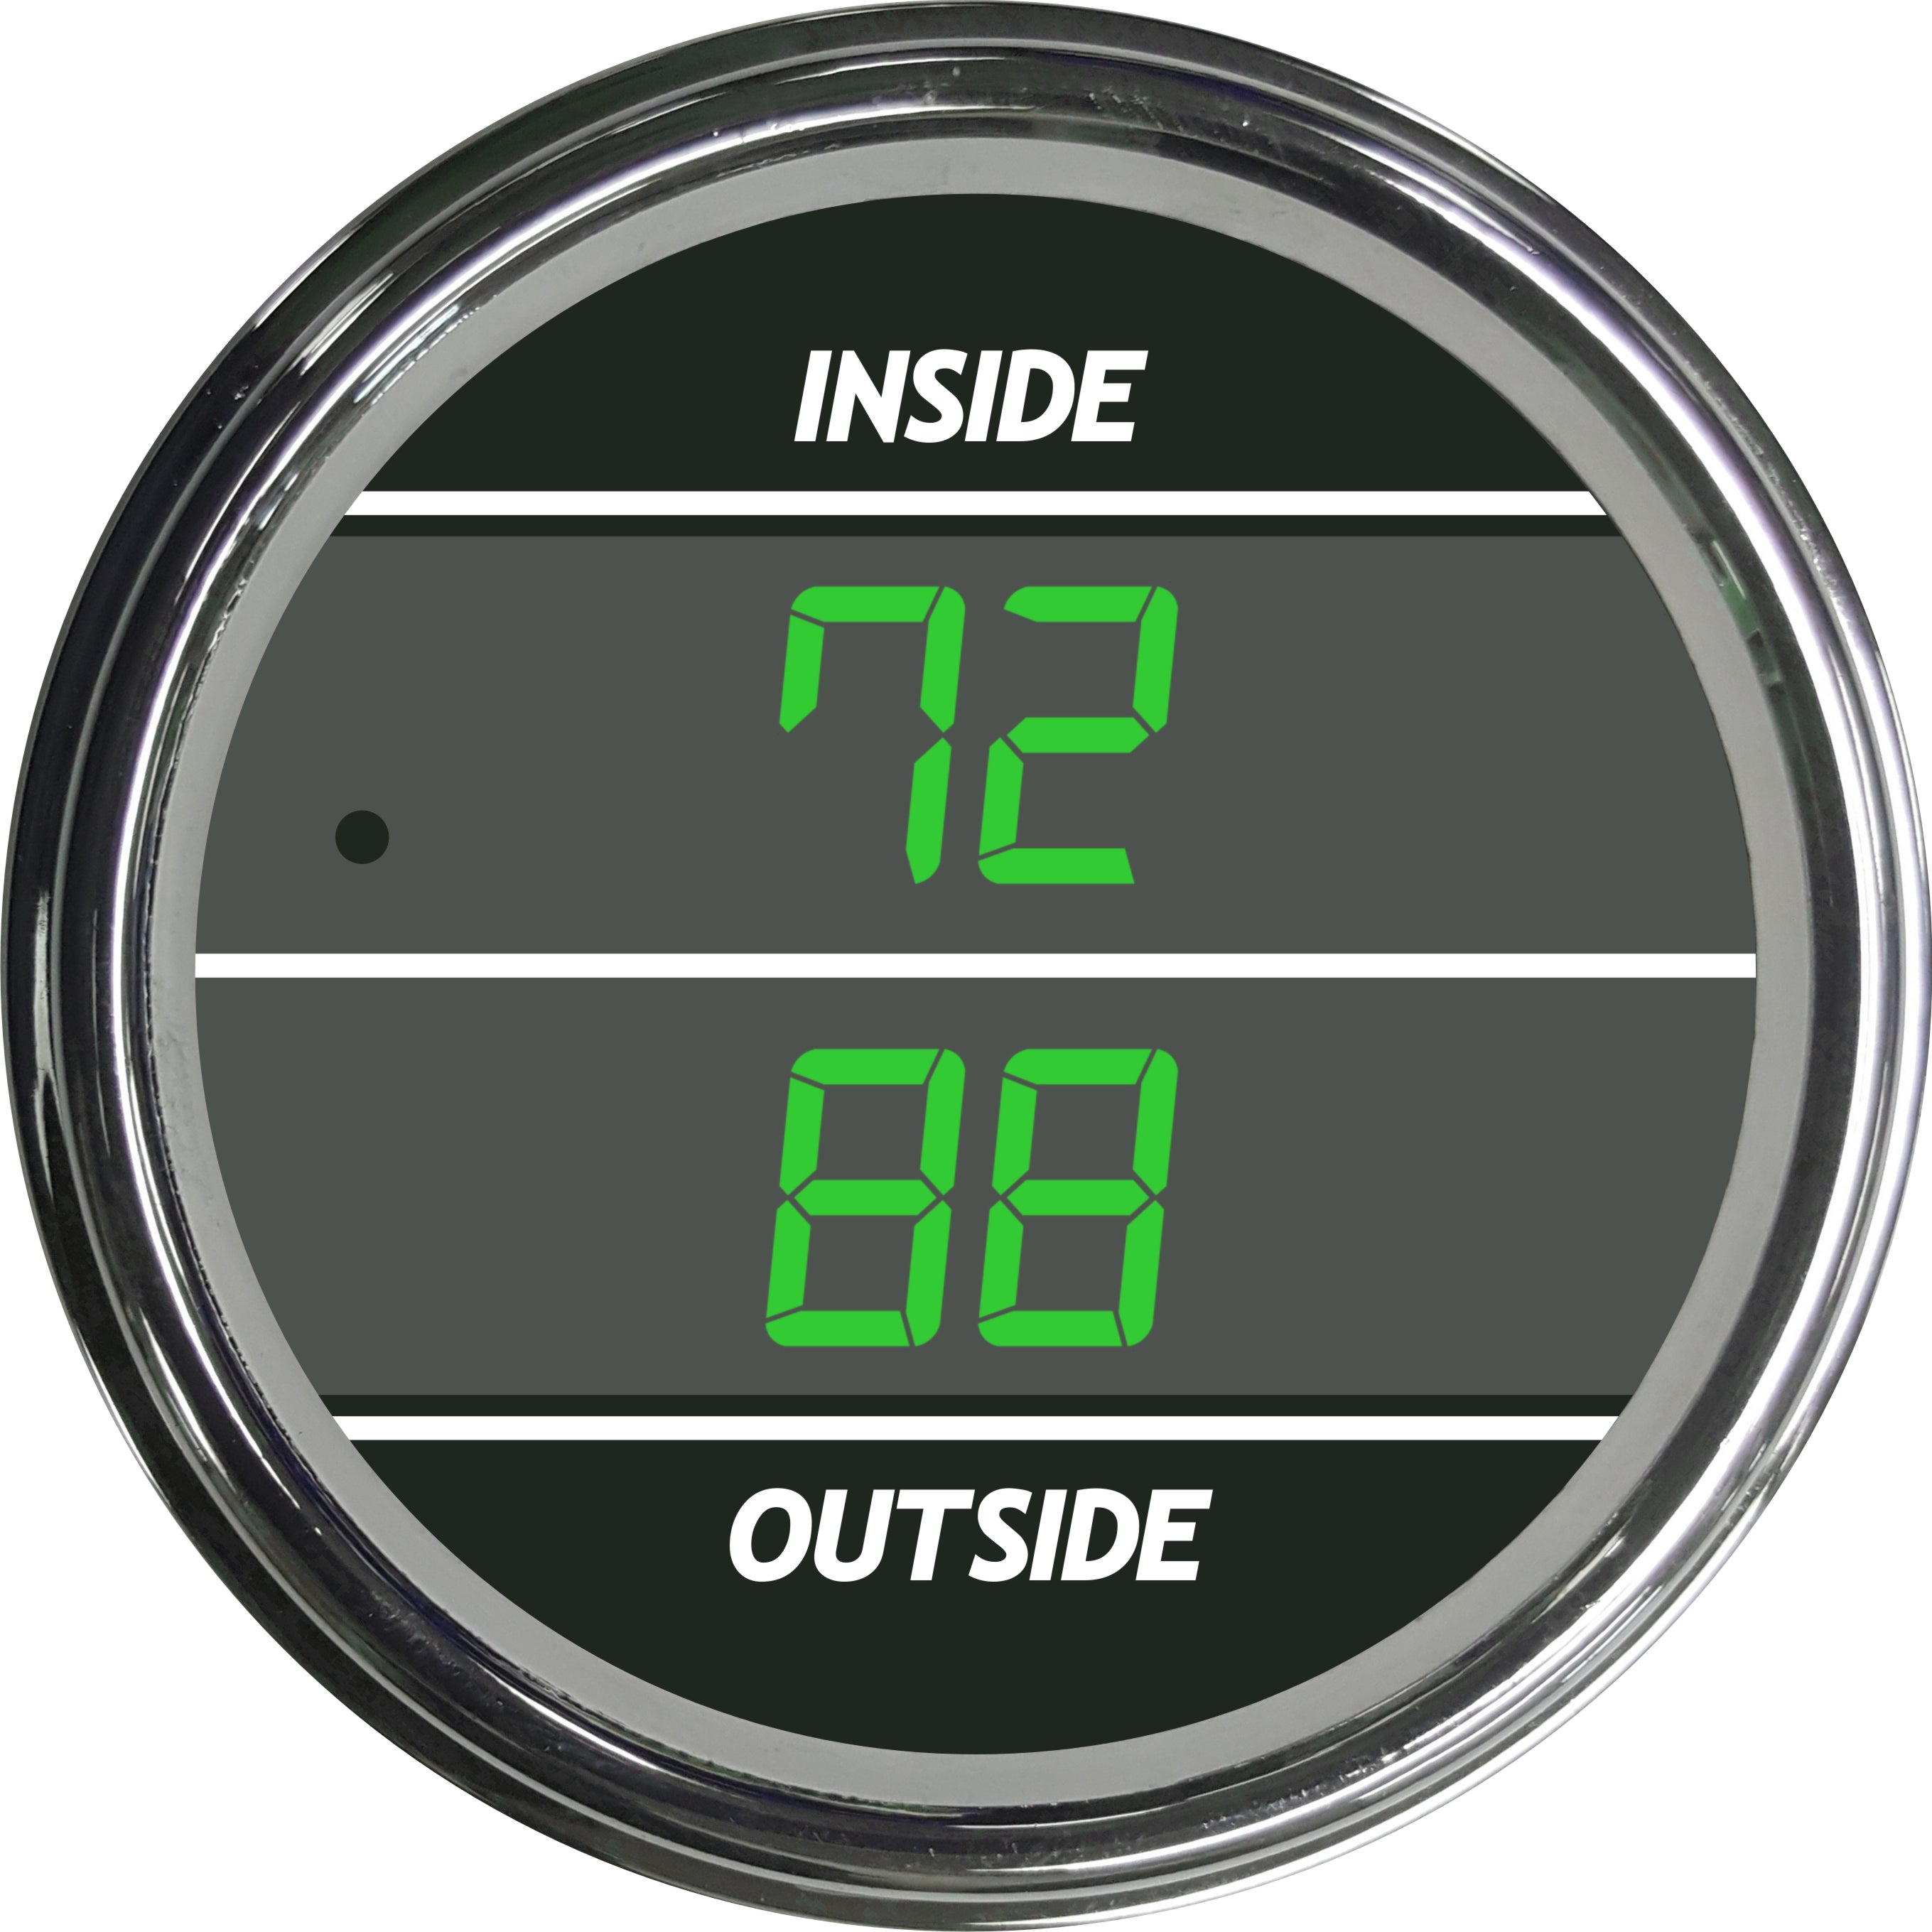 Autogear Interior & Exterior Digital Thermometer TH91